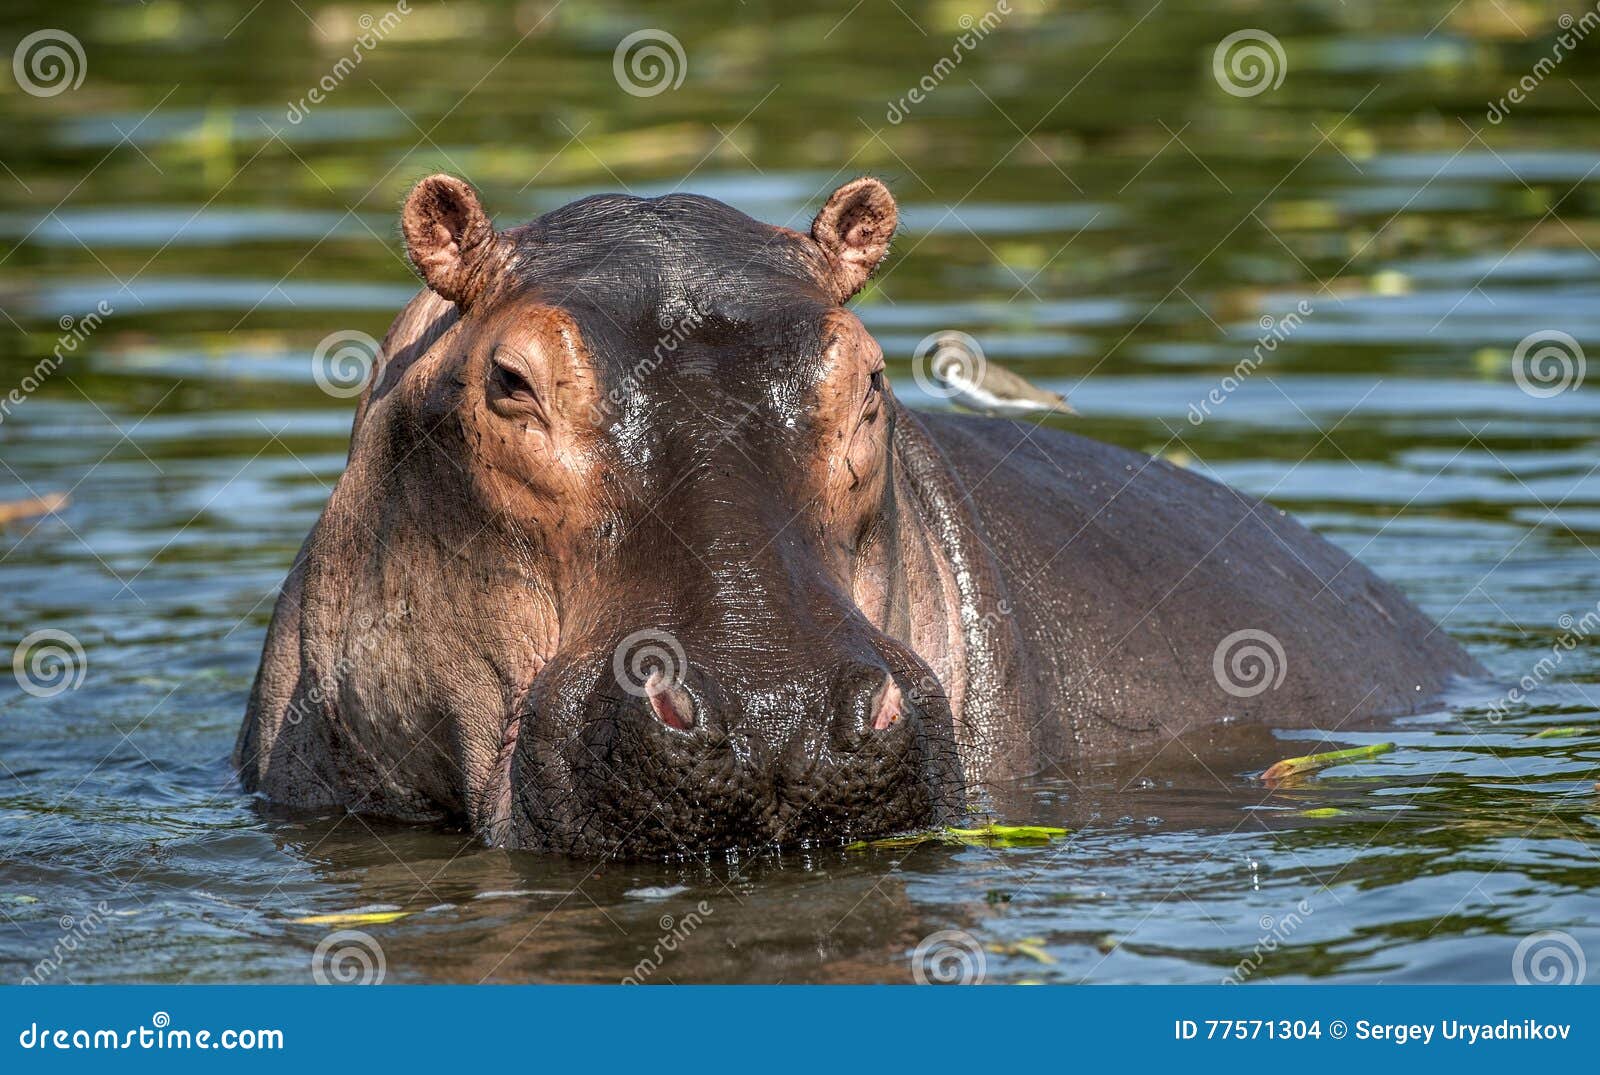 common hippopotamus in the water.